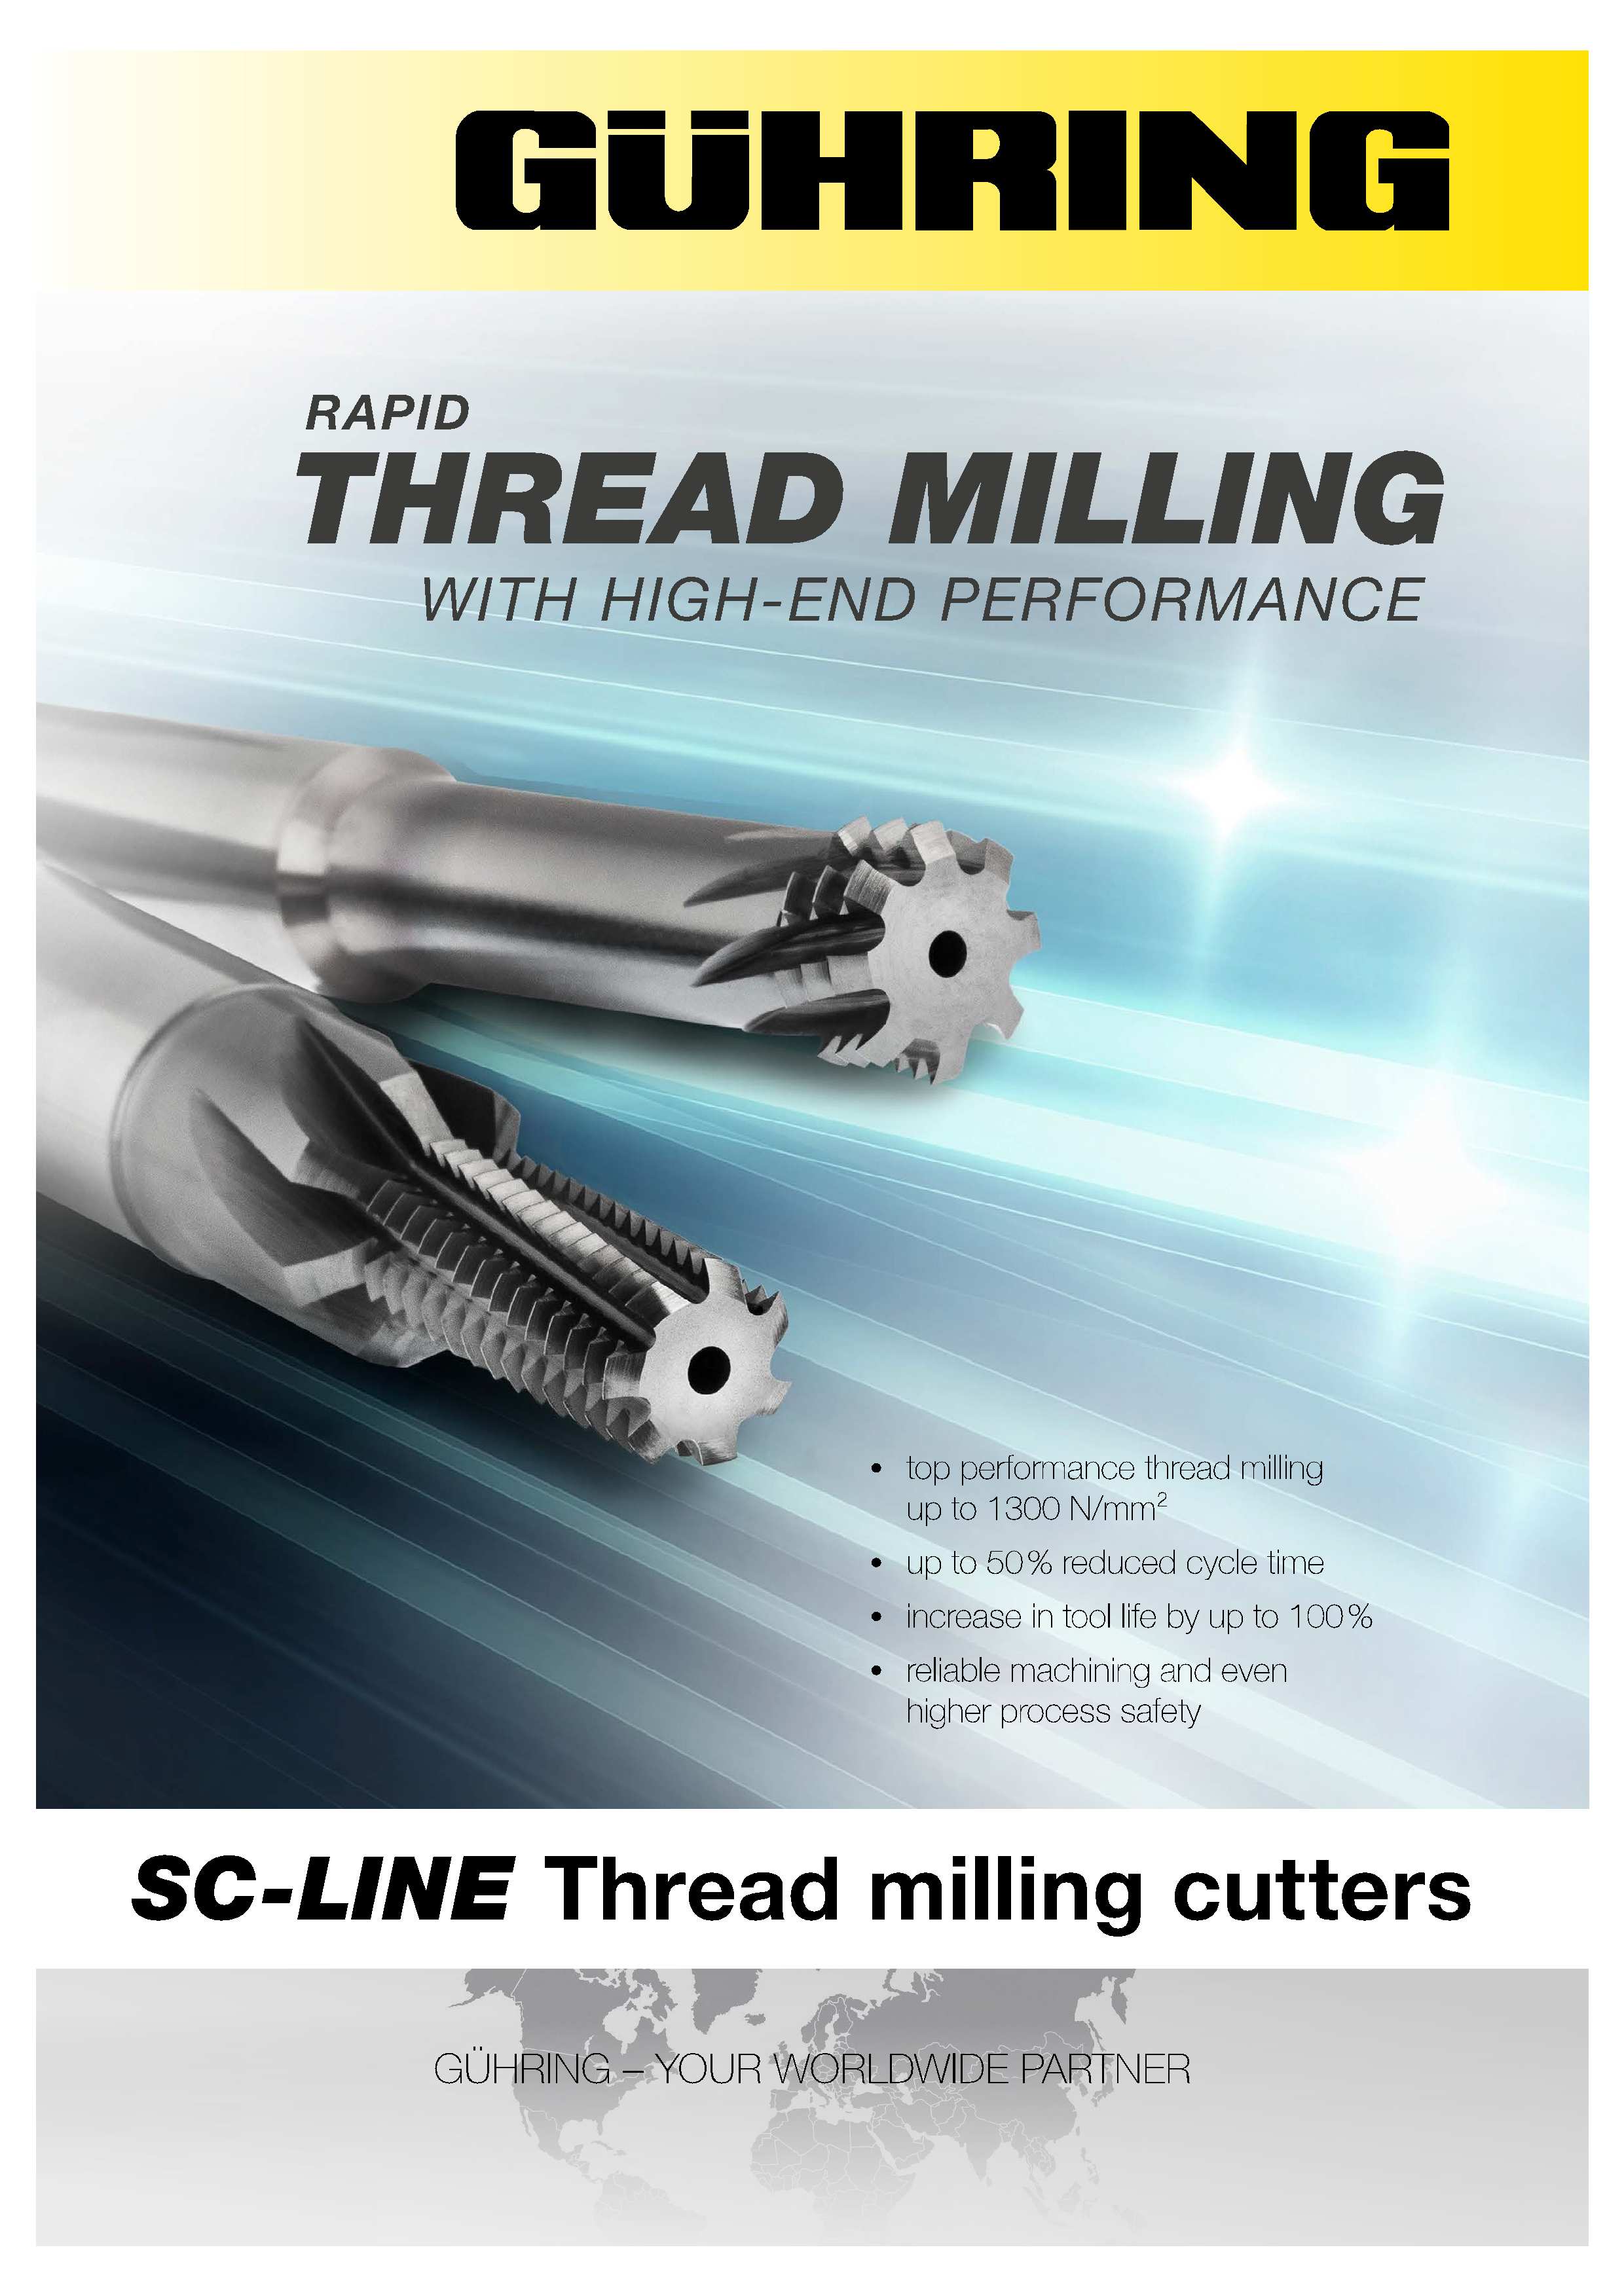 SC-Line thread milling cutter